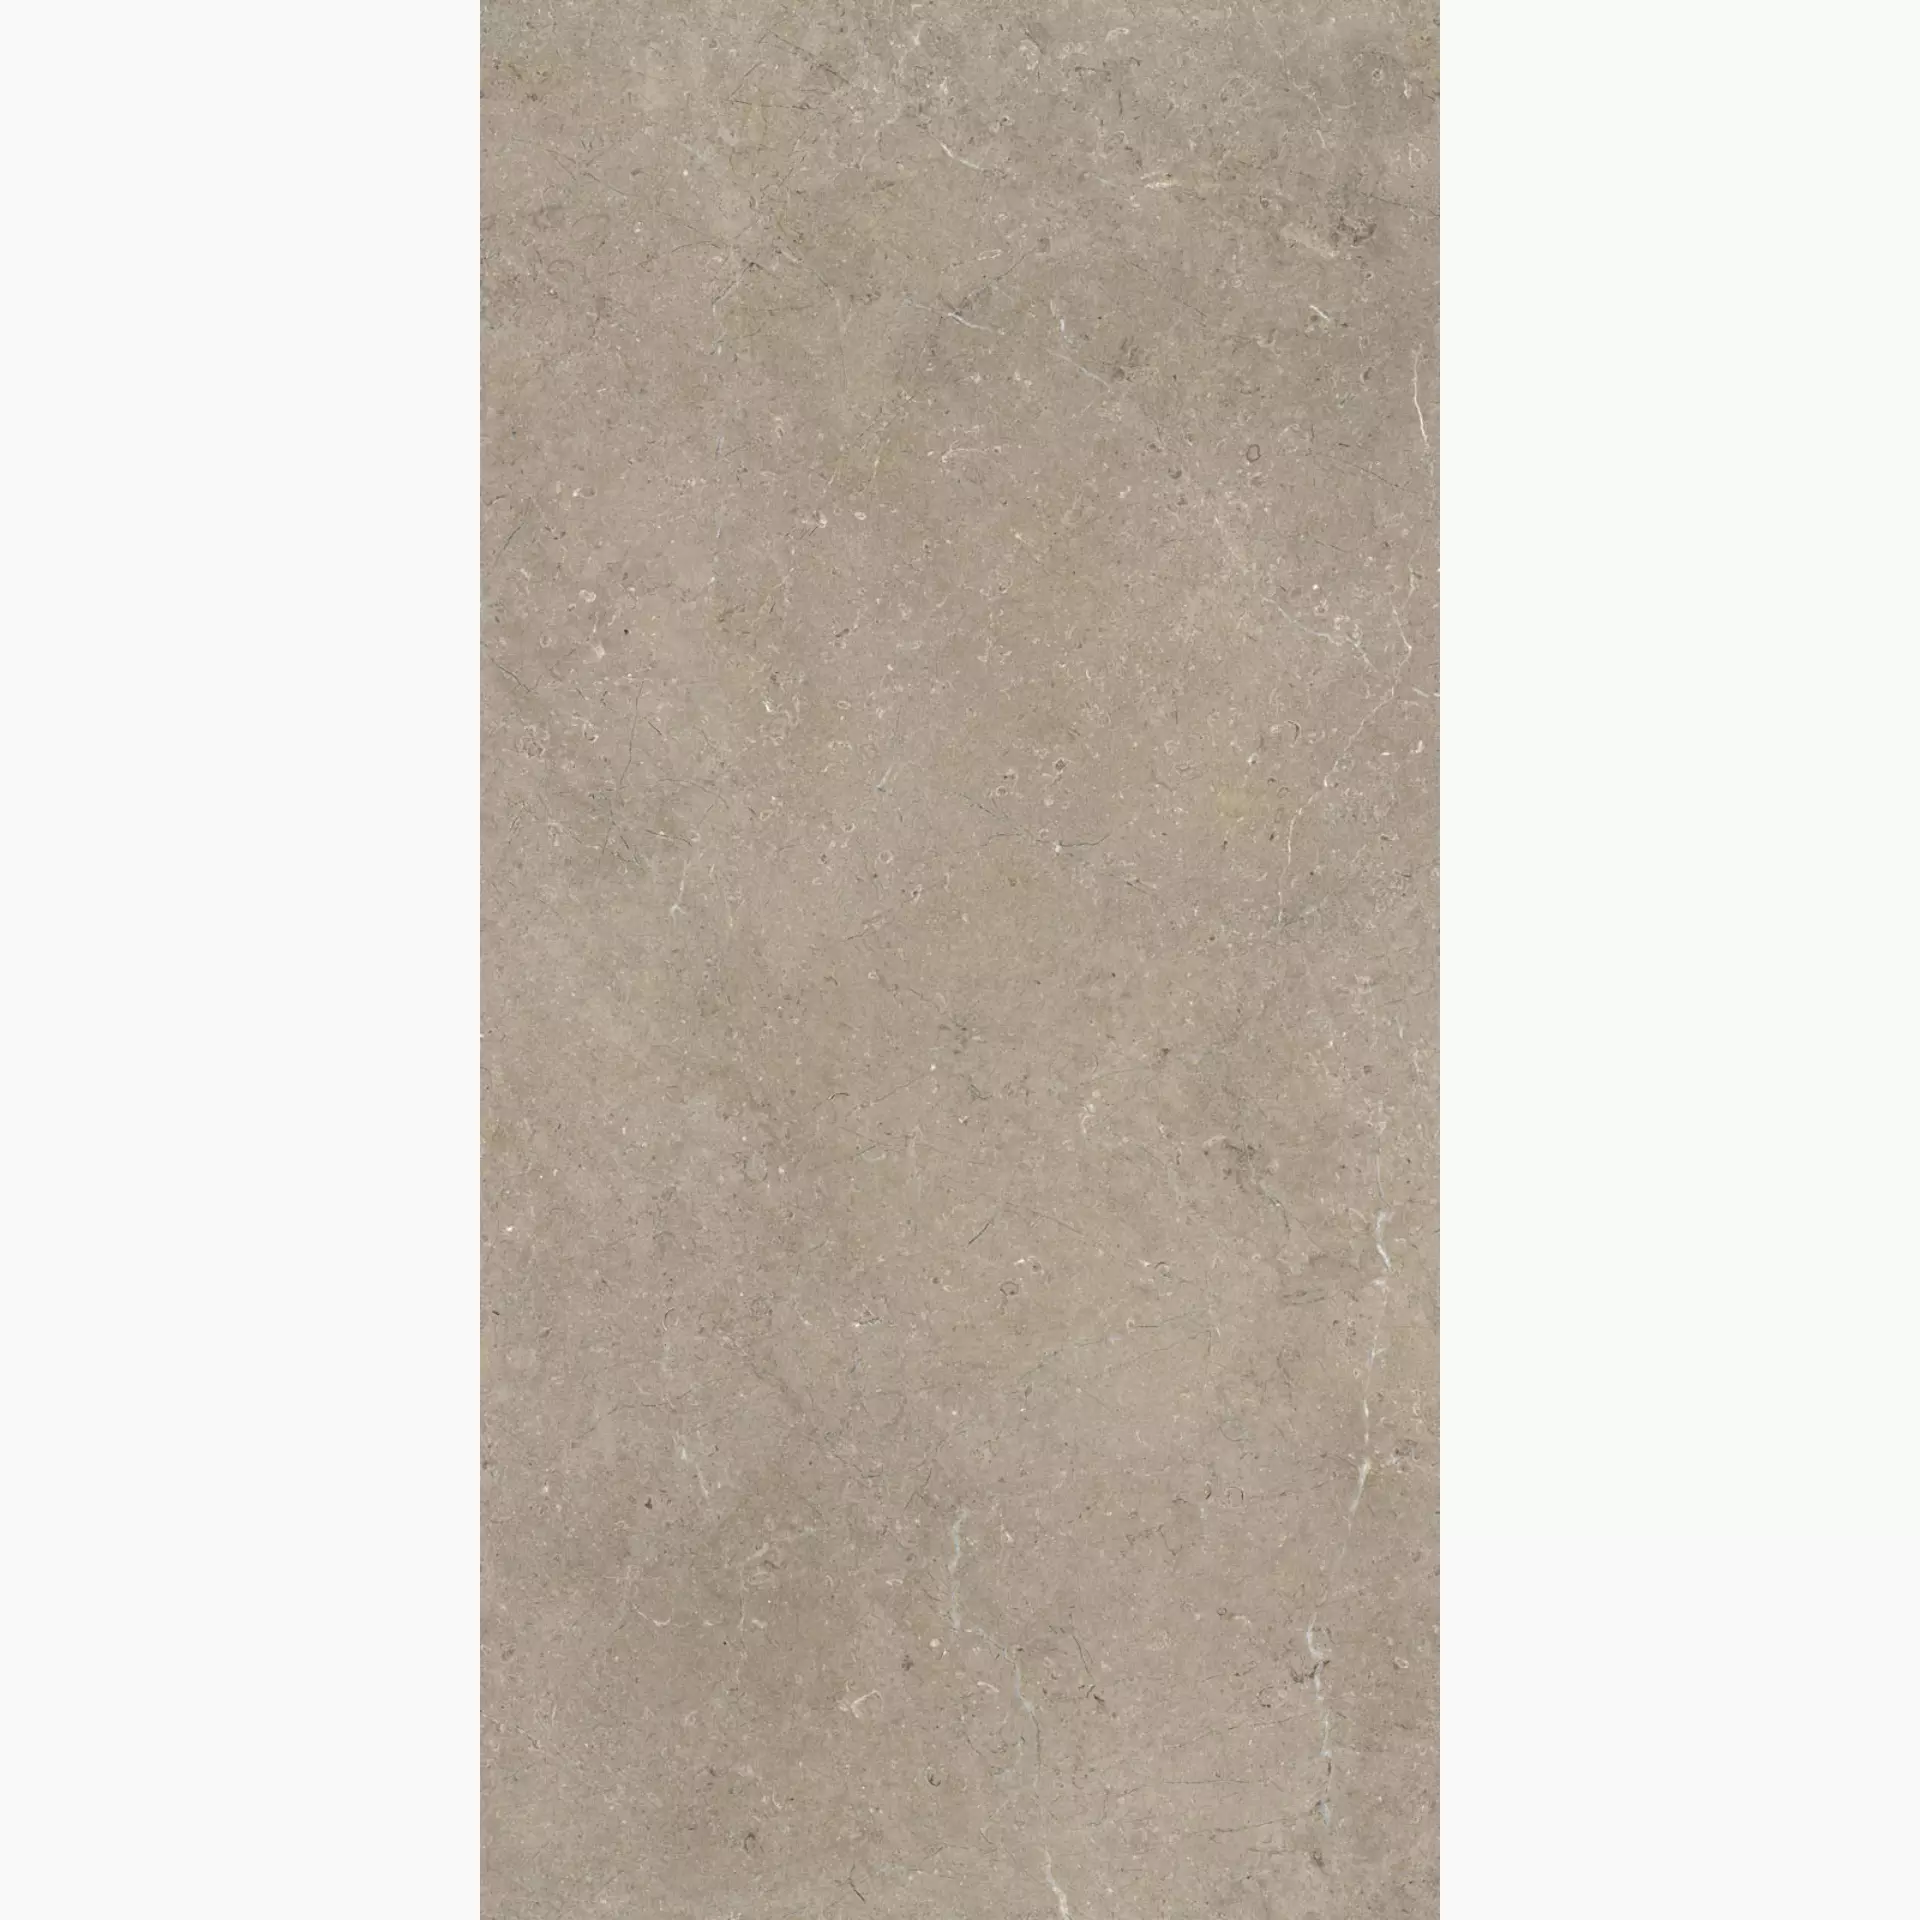 Marazzi Mystone Limestone Taupe Naturale – Matt M7E1 75x150cm rectified 9,5mm